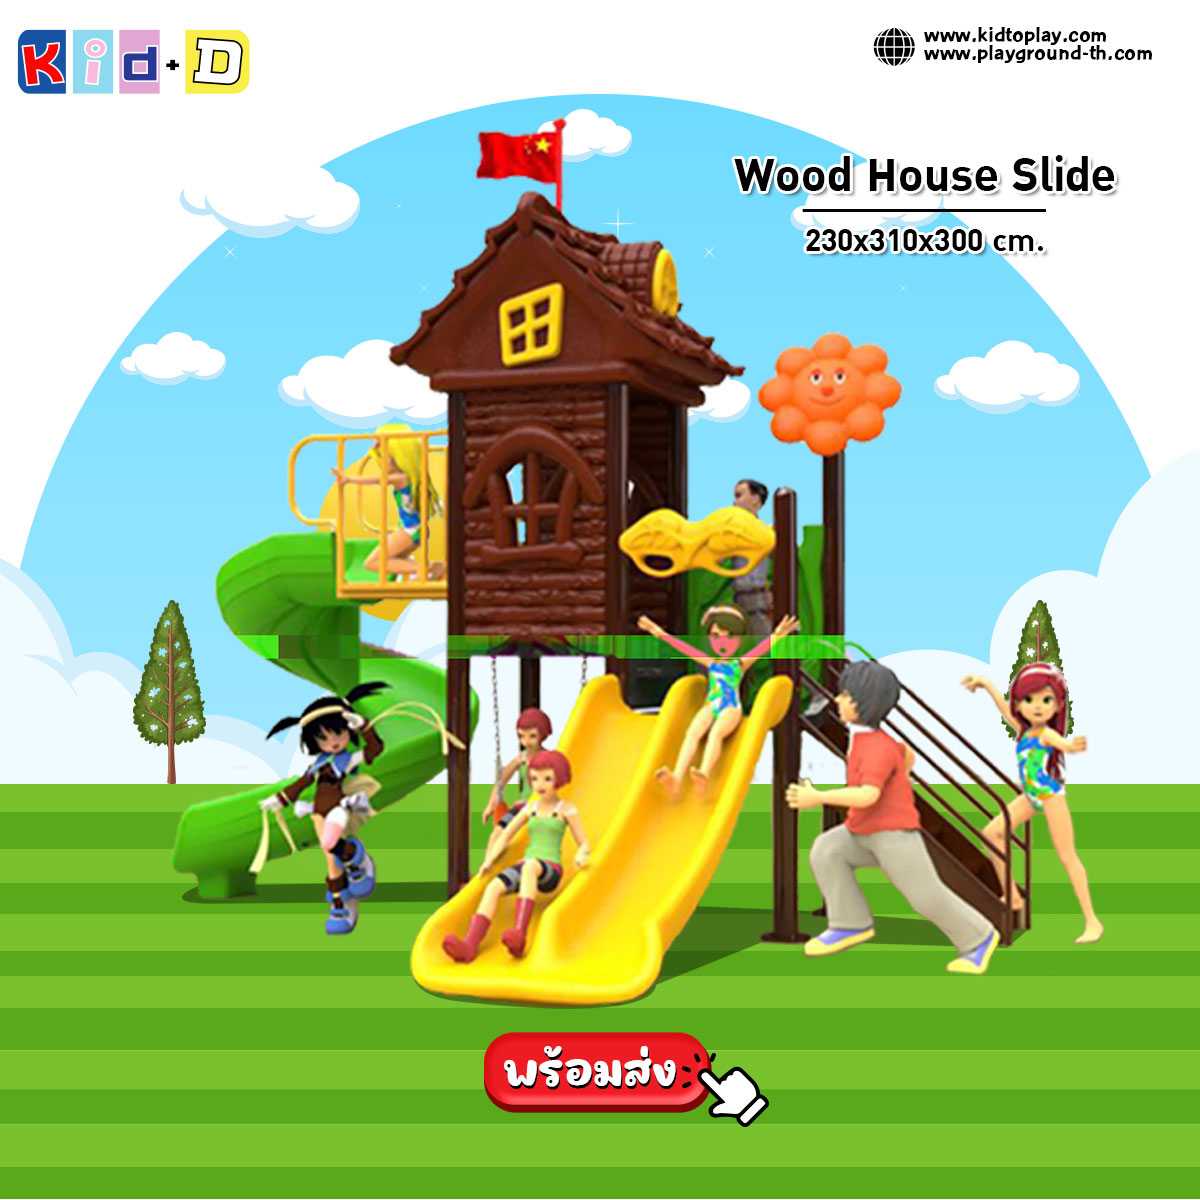 Wood House Slide